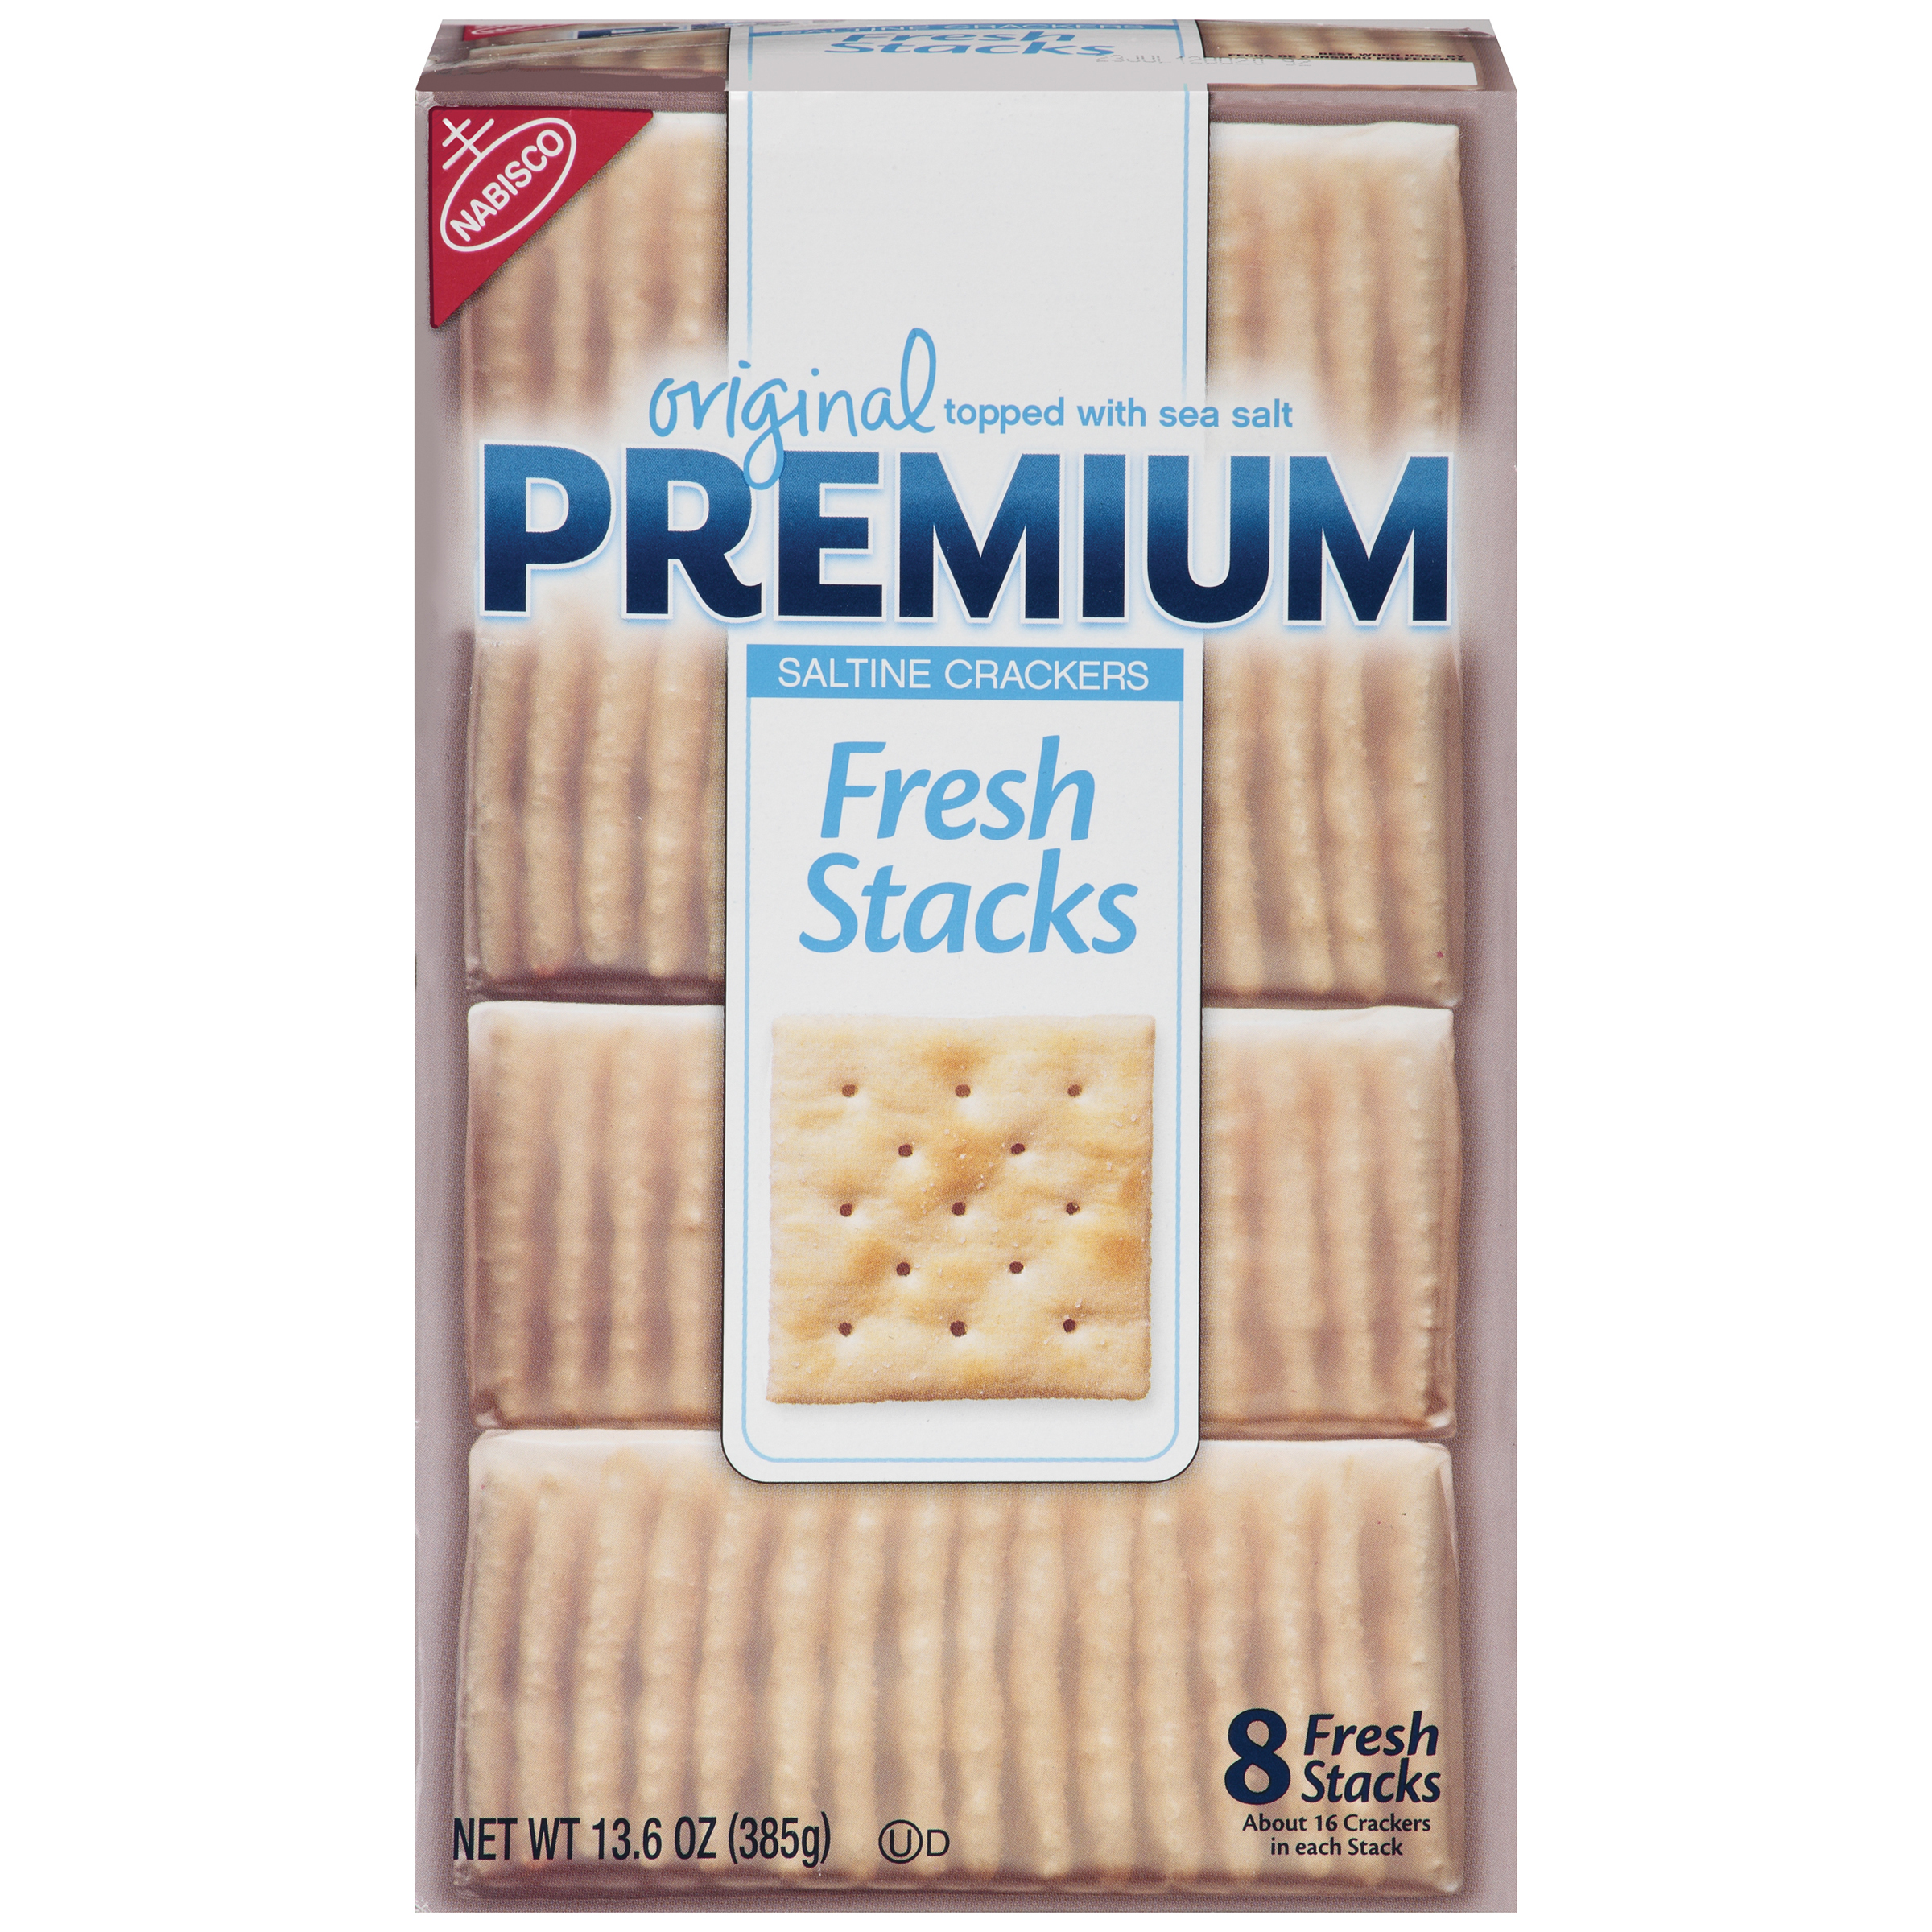 PREMIUM Fresh Crackers 13.6 oz